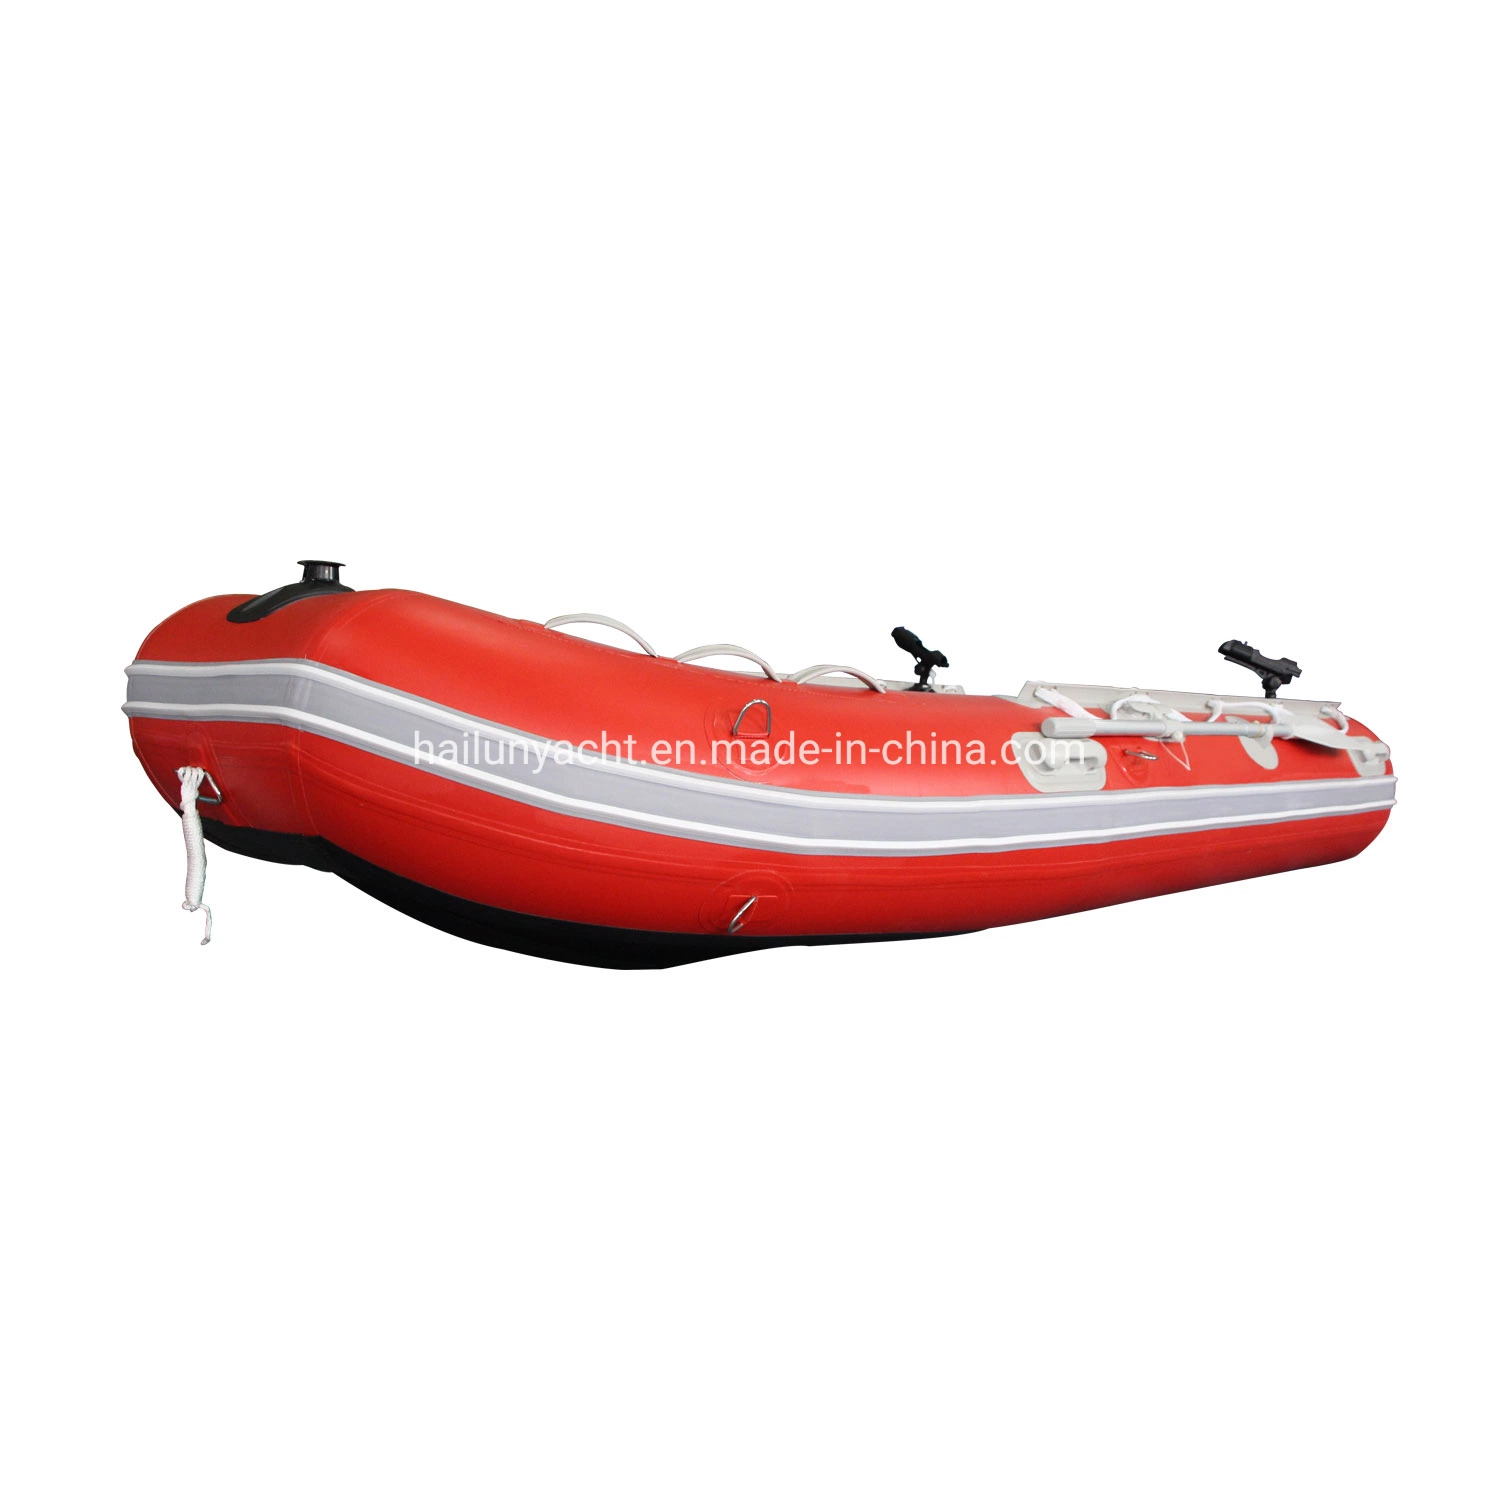 Barco de motor Barco de pesca de deportes de inflables inflables bote